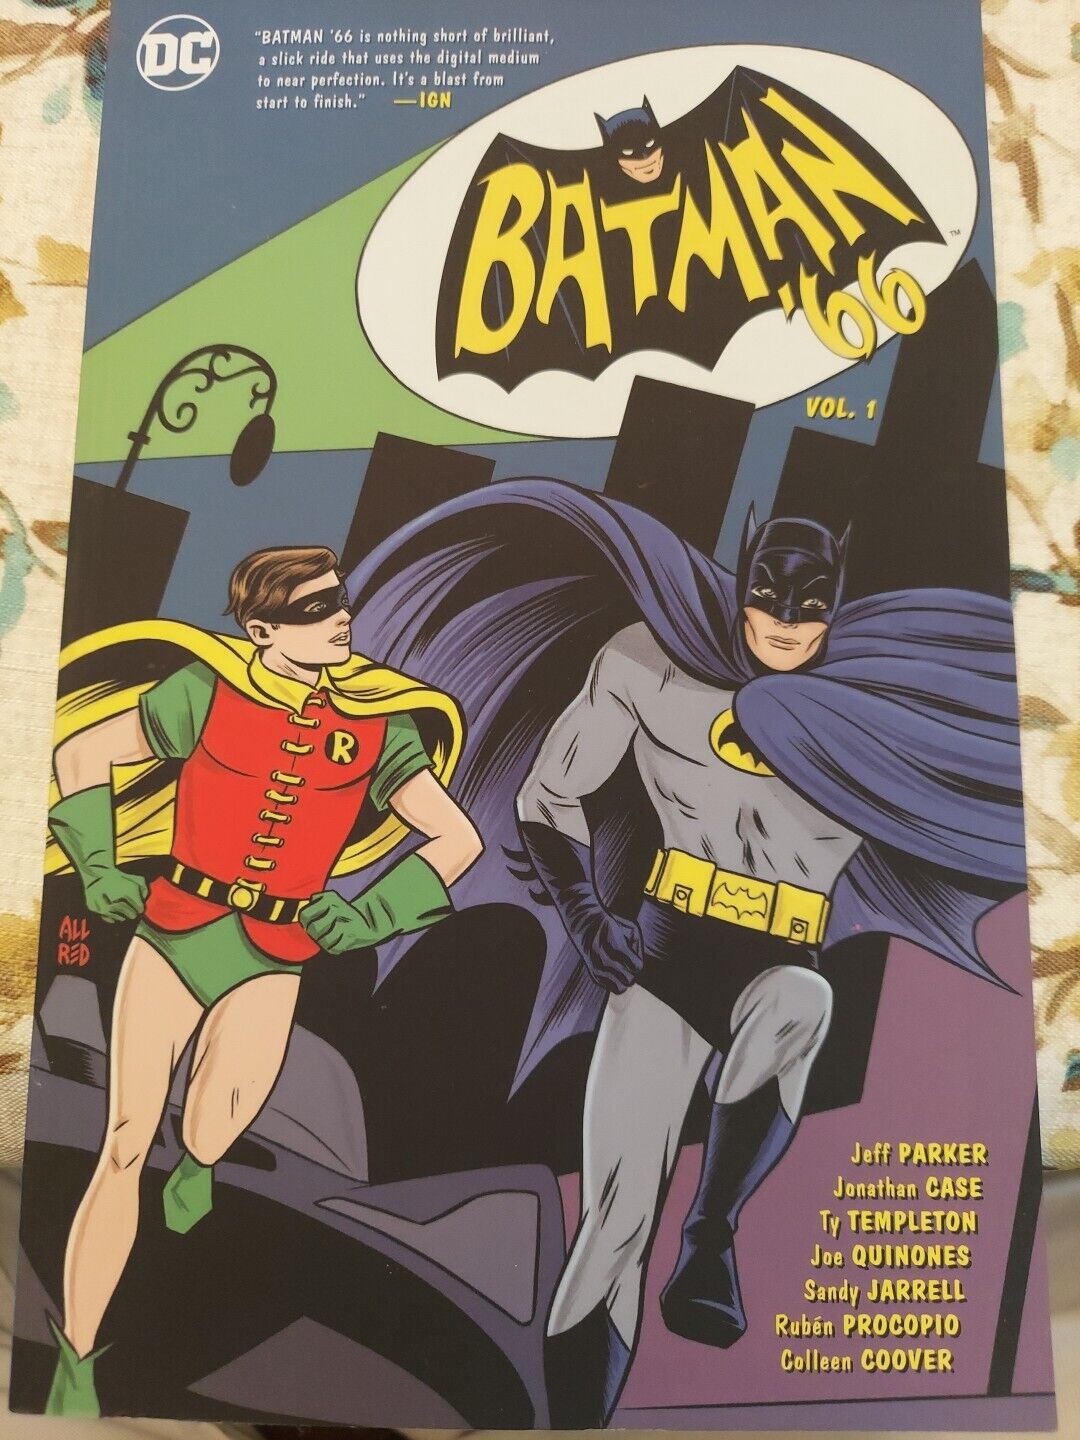 Batman \'66 Vol. 1 DC Comics 2014 Jeff Parker Jonathan Case Adam West Burt Ward